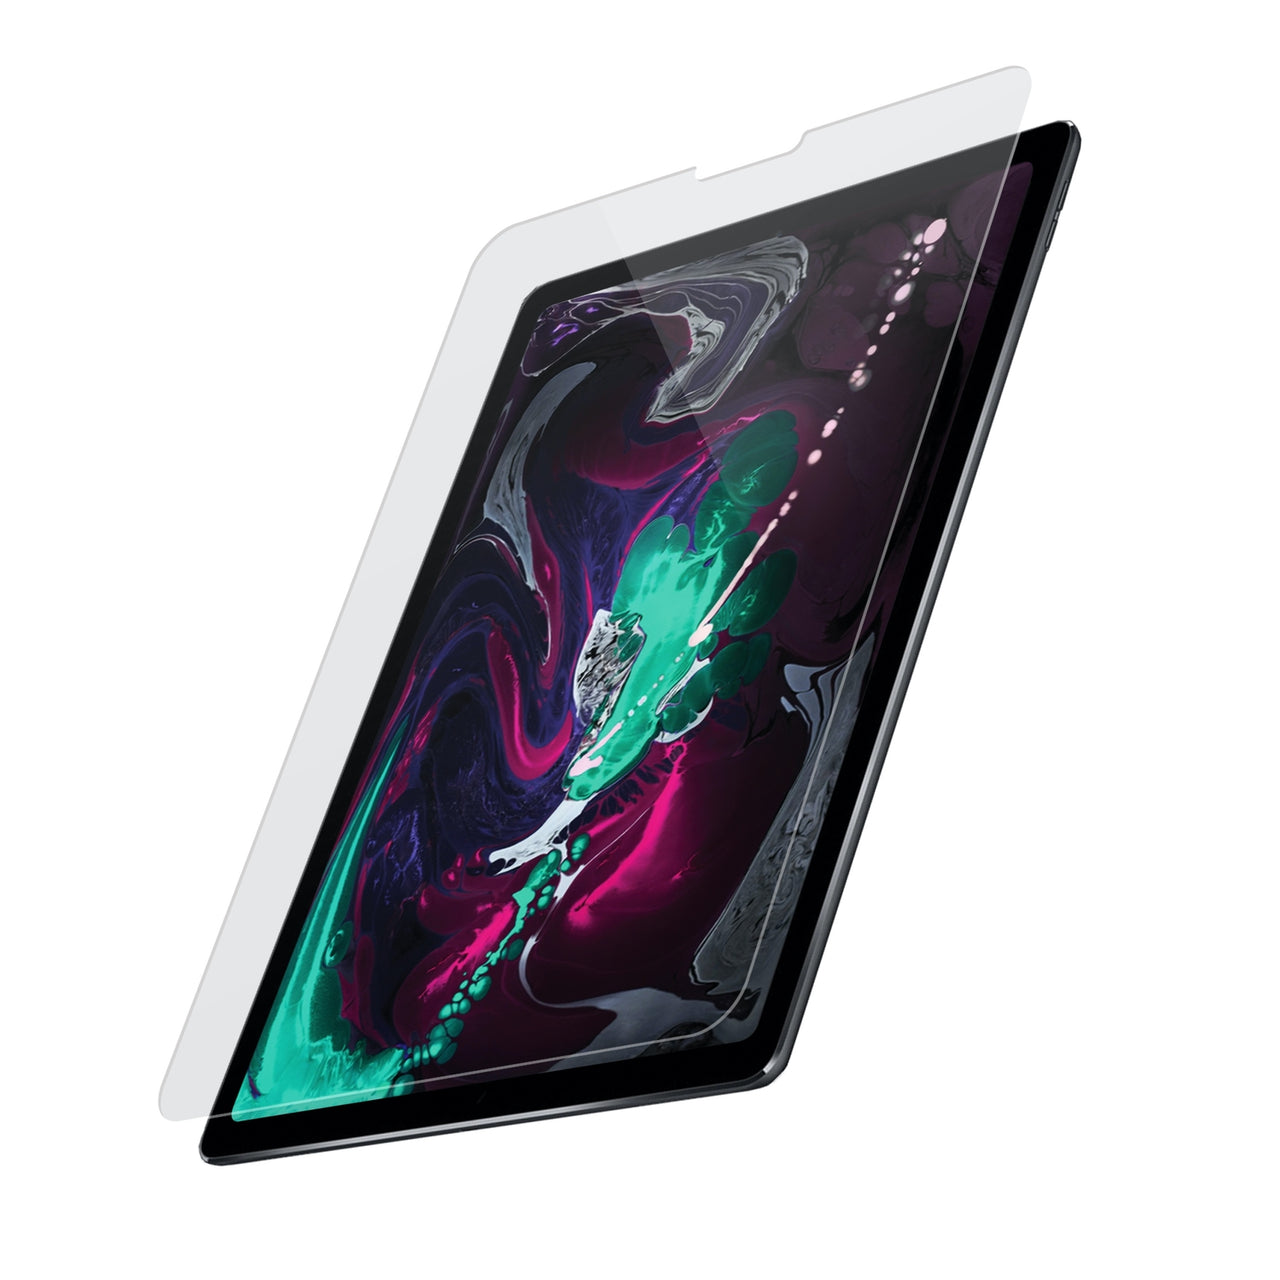 NVS Atom Glass for iPad Pro 11" Gen 1/2/3+ iPad Air 10.9"